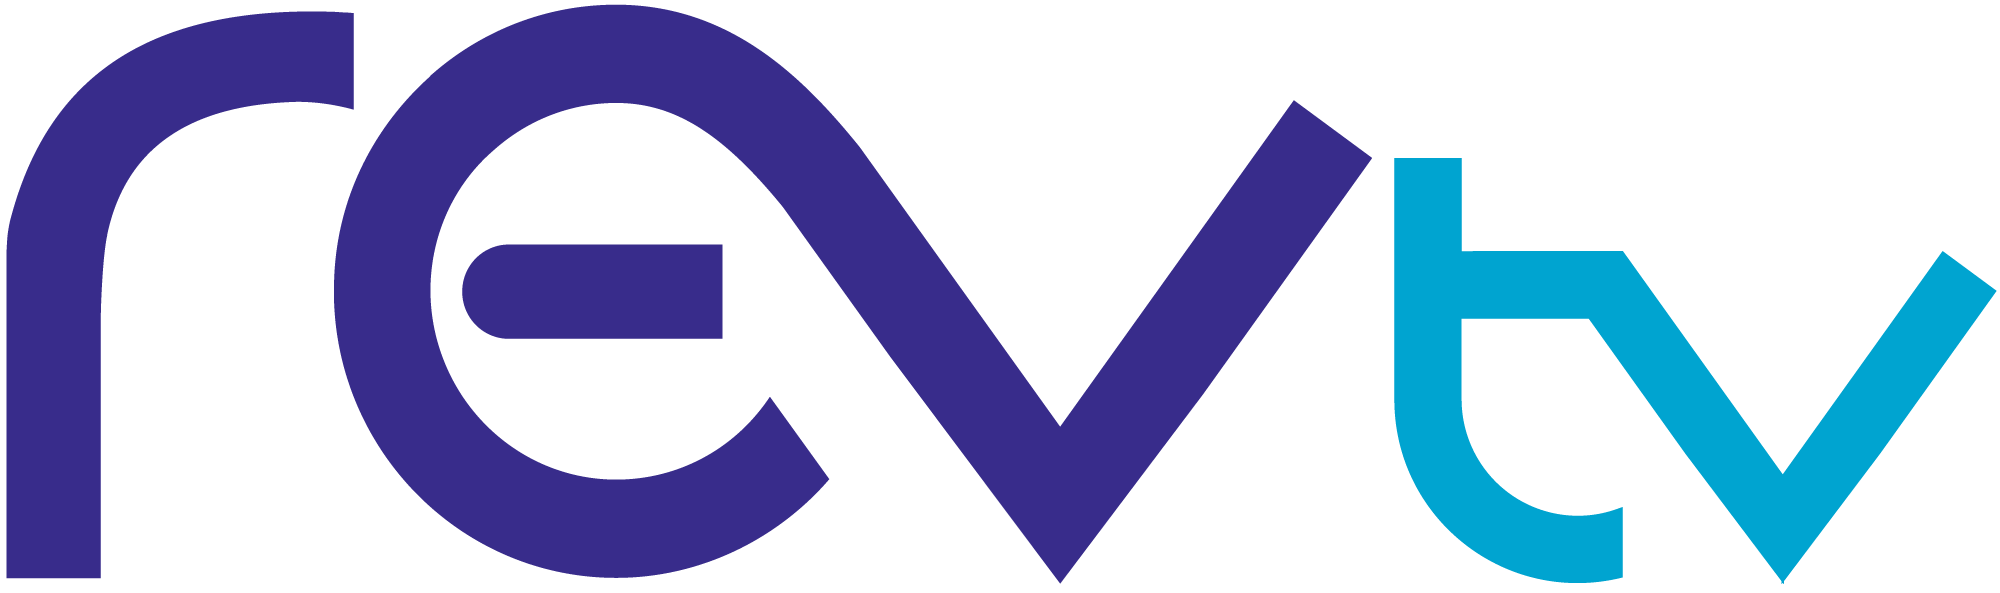 REV-TV-logo